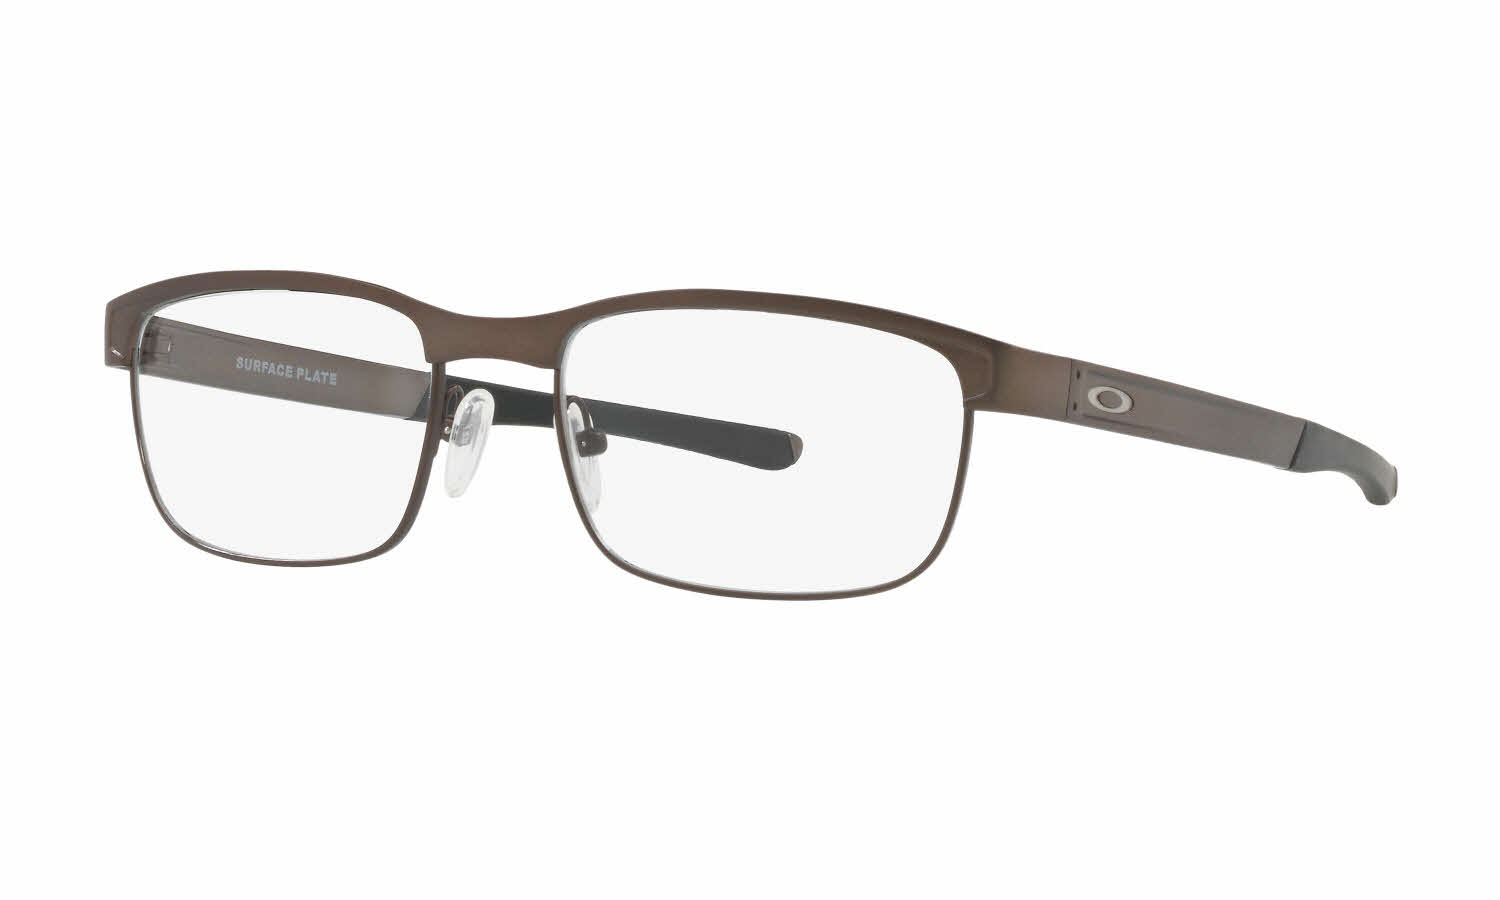 Oakley Surface Plate Eyeglasses